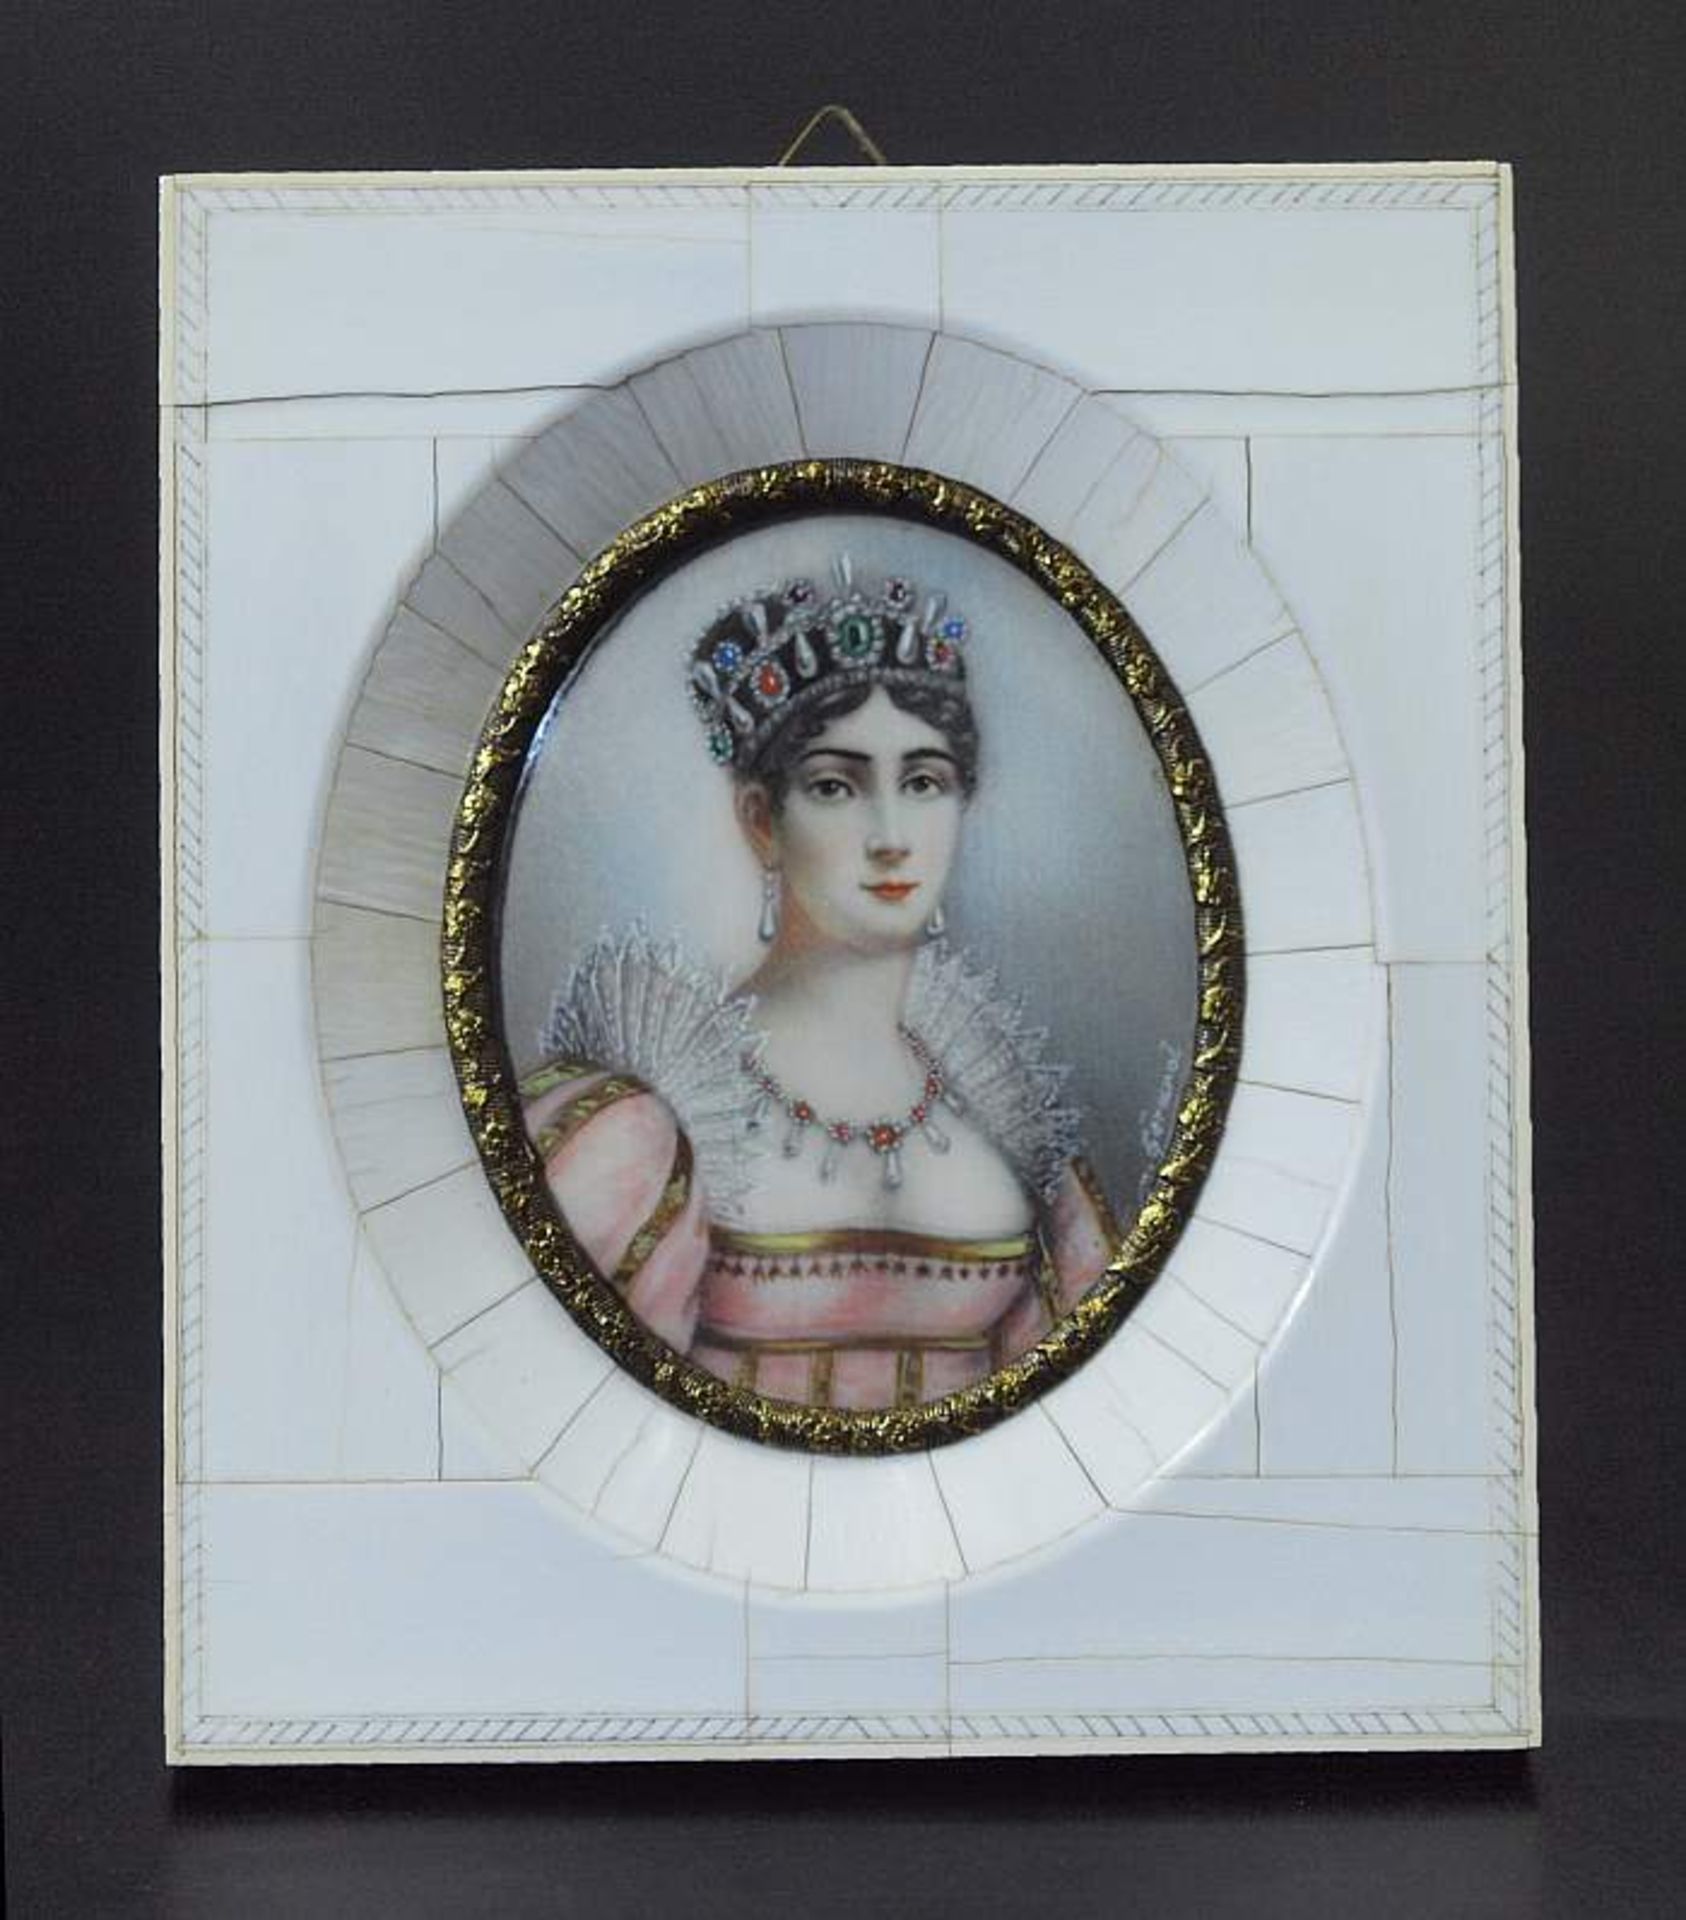 Elfenbein-Miniatur. "Josephine de Beauharnais" . Elfenbein-Miniatur. "Josephine de Beauharnais" nach